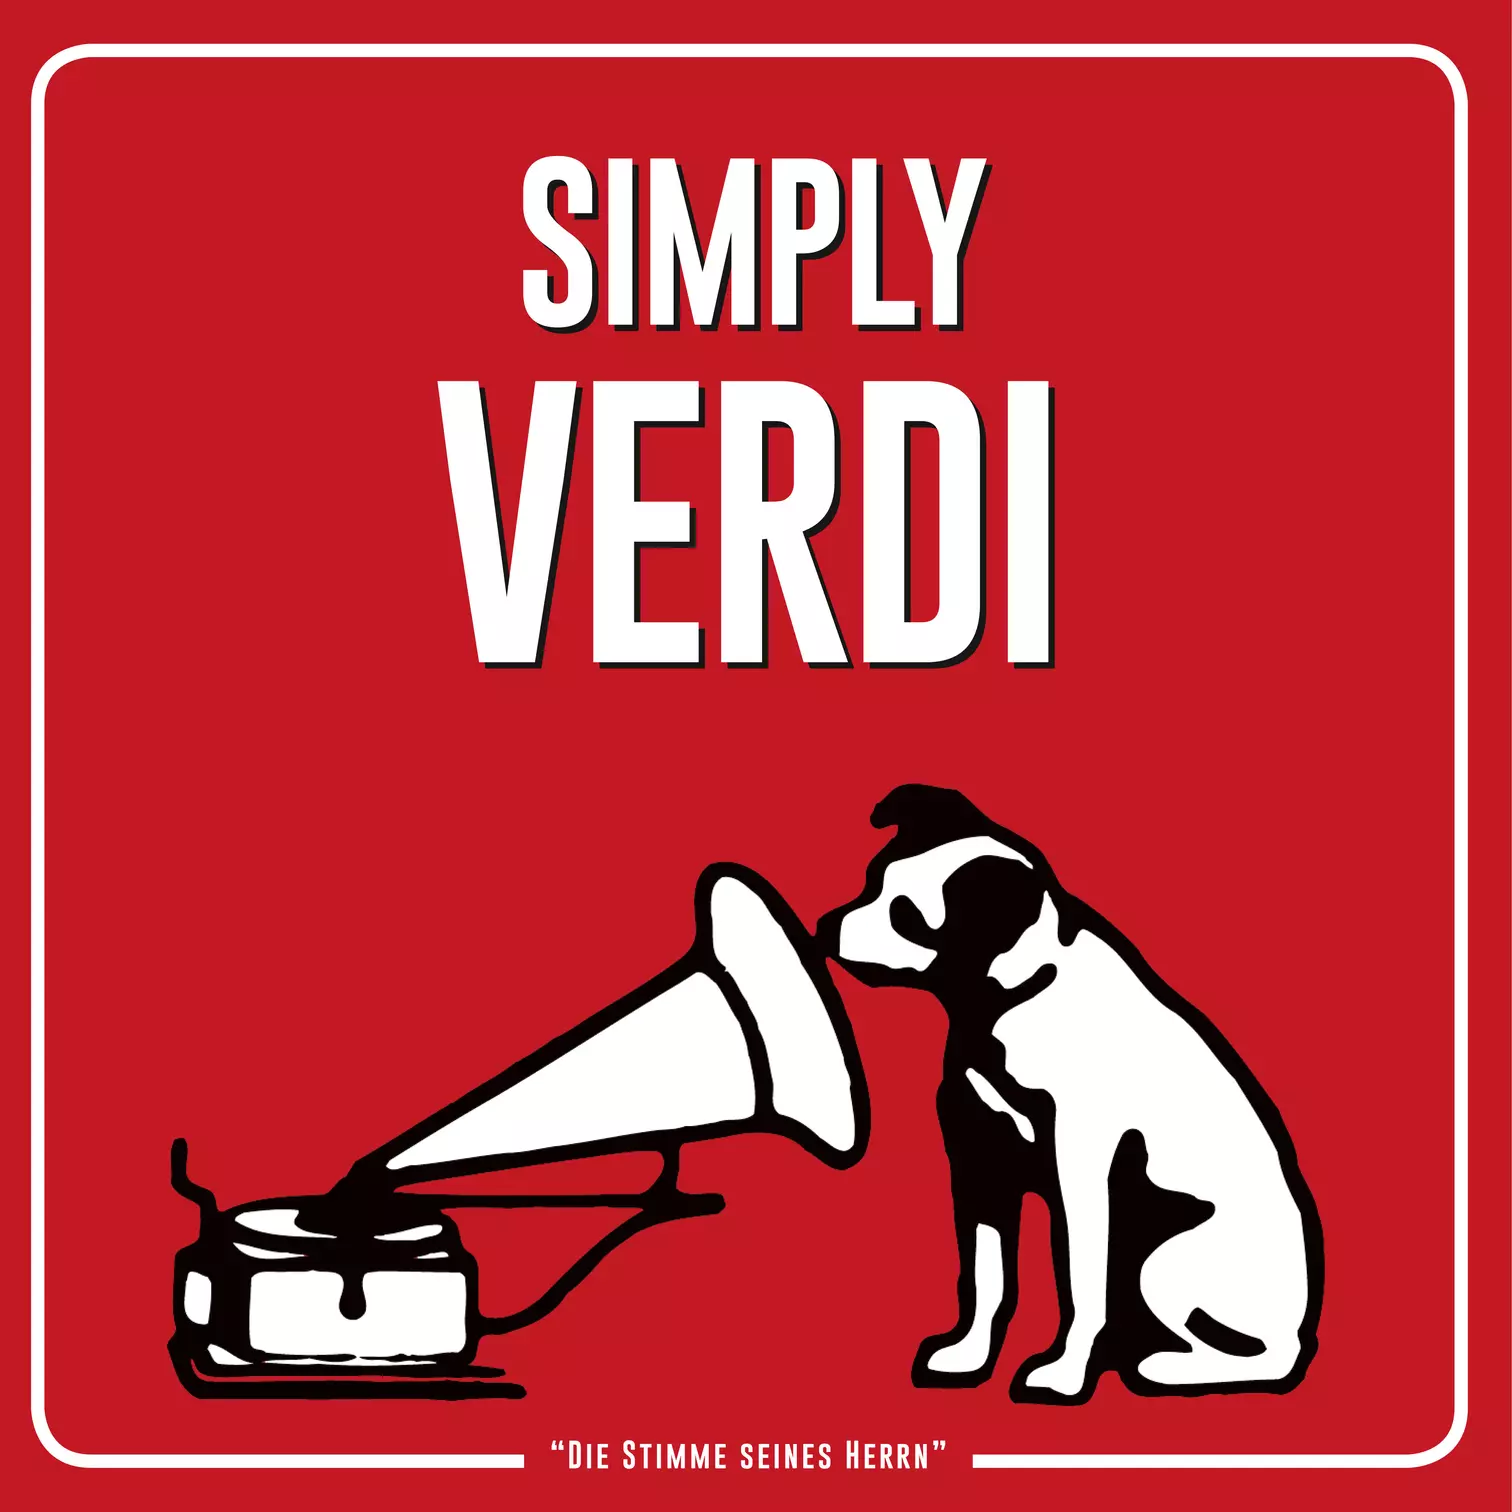 Simply Verdi